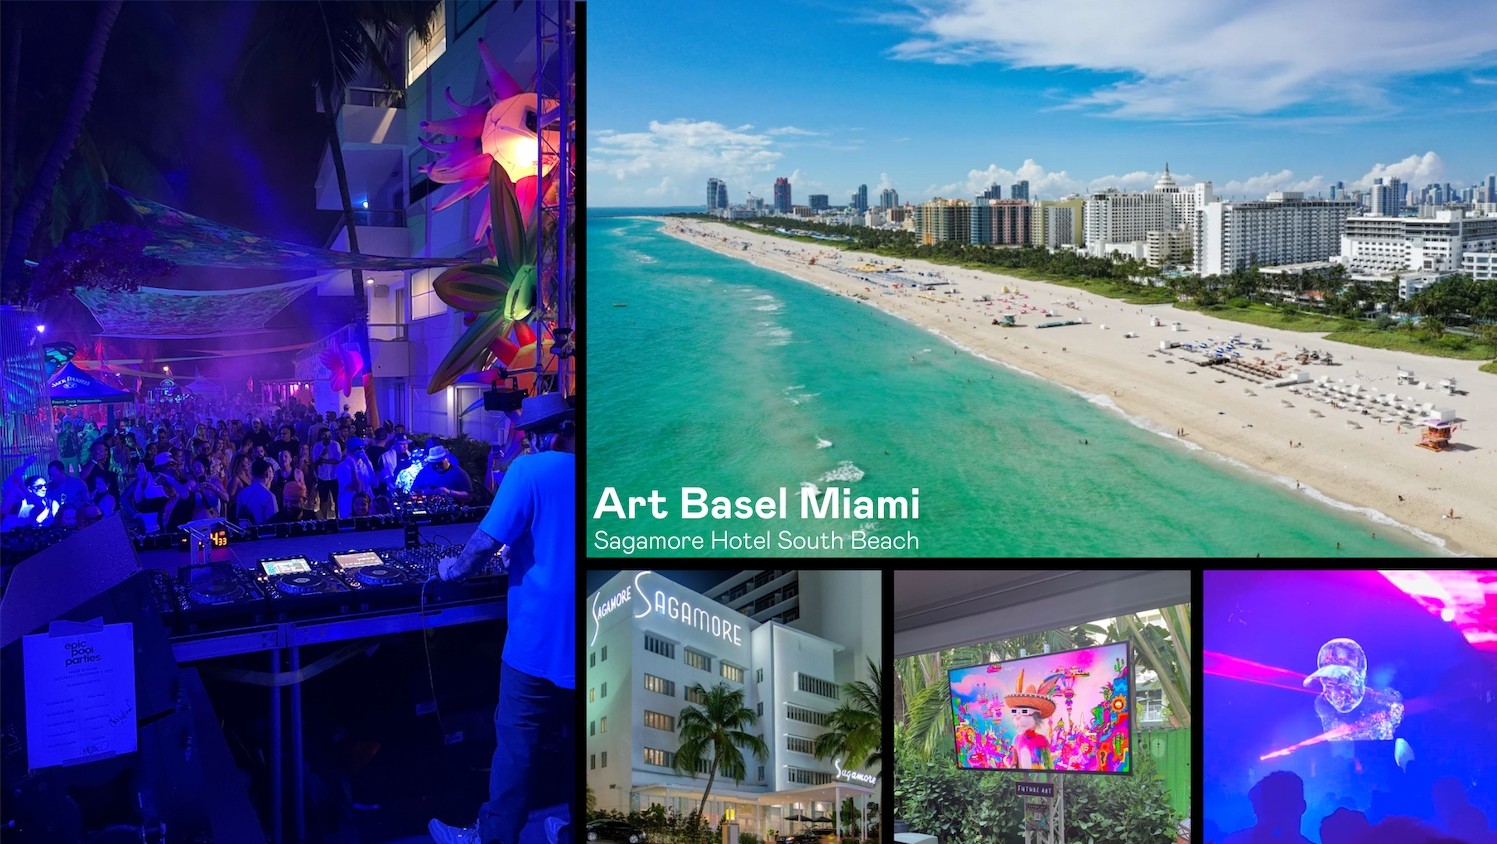 Art Basel Miami_Sagamore Hotel South Beach [images 2022]